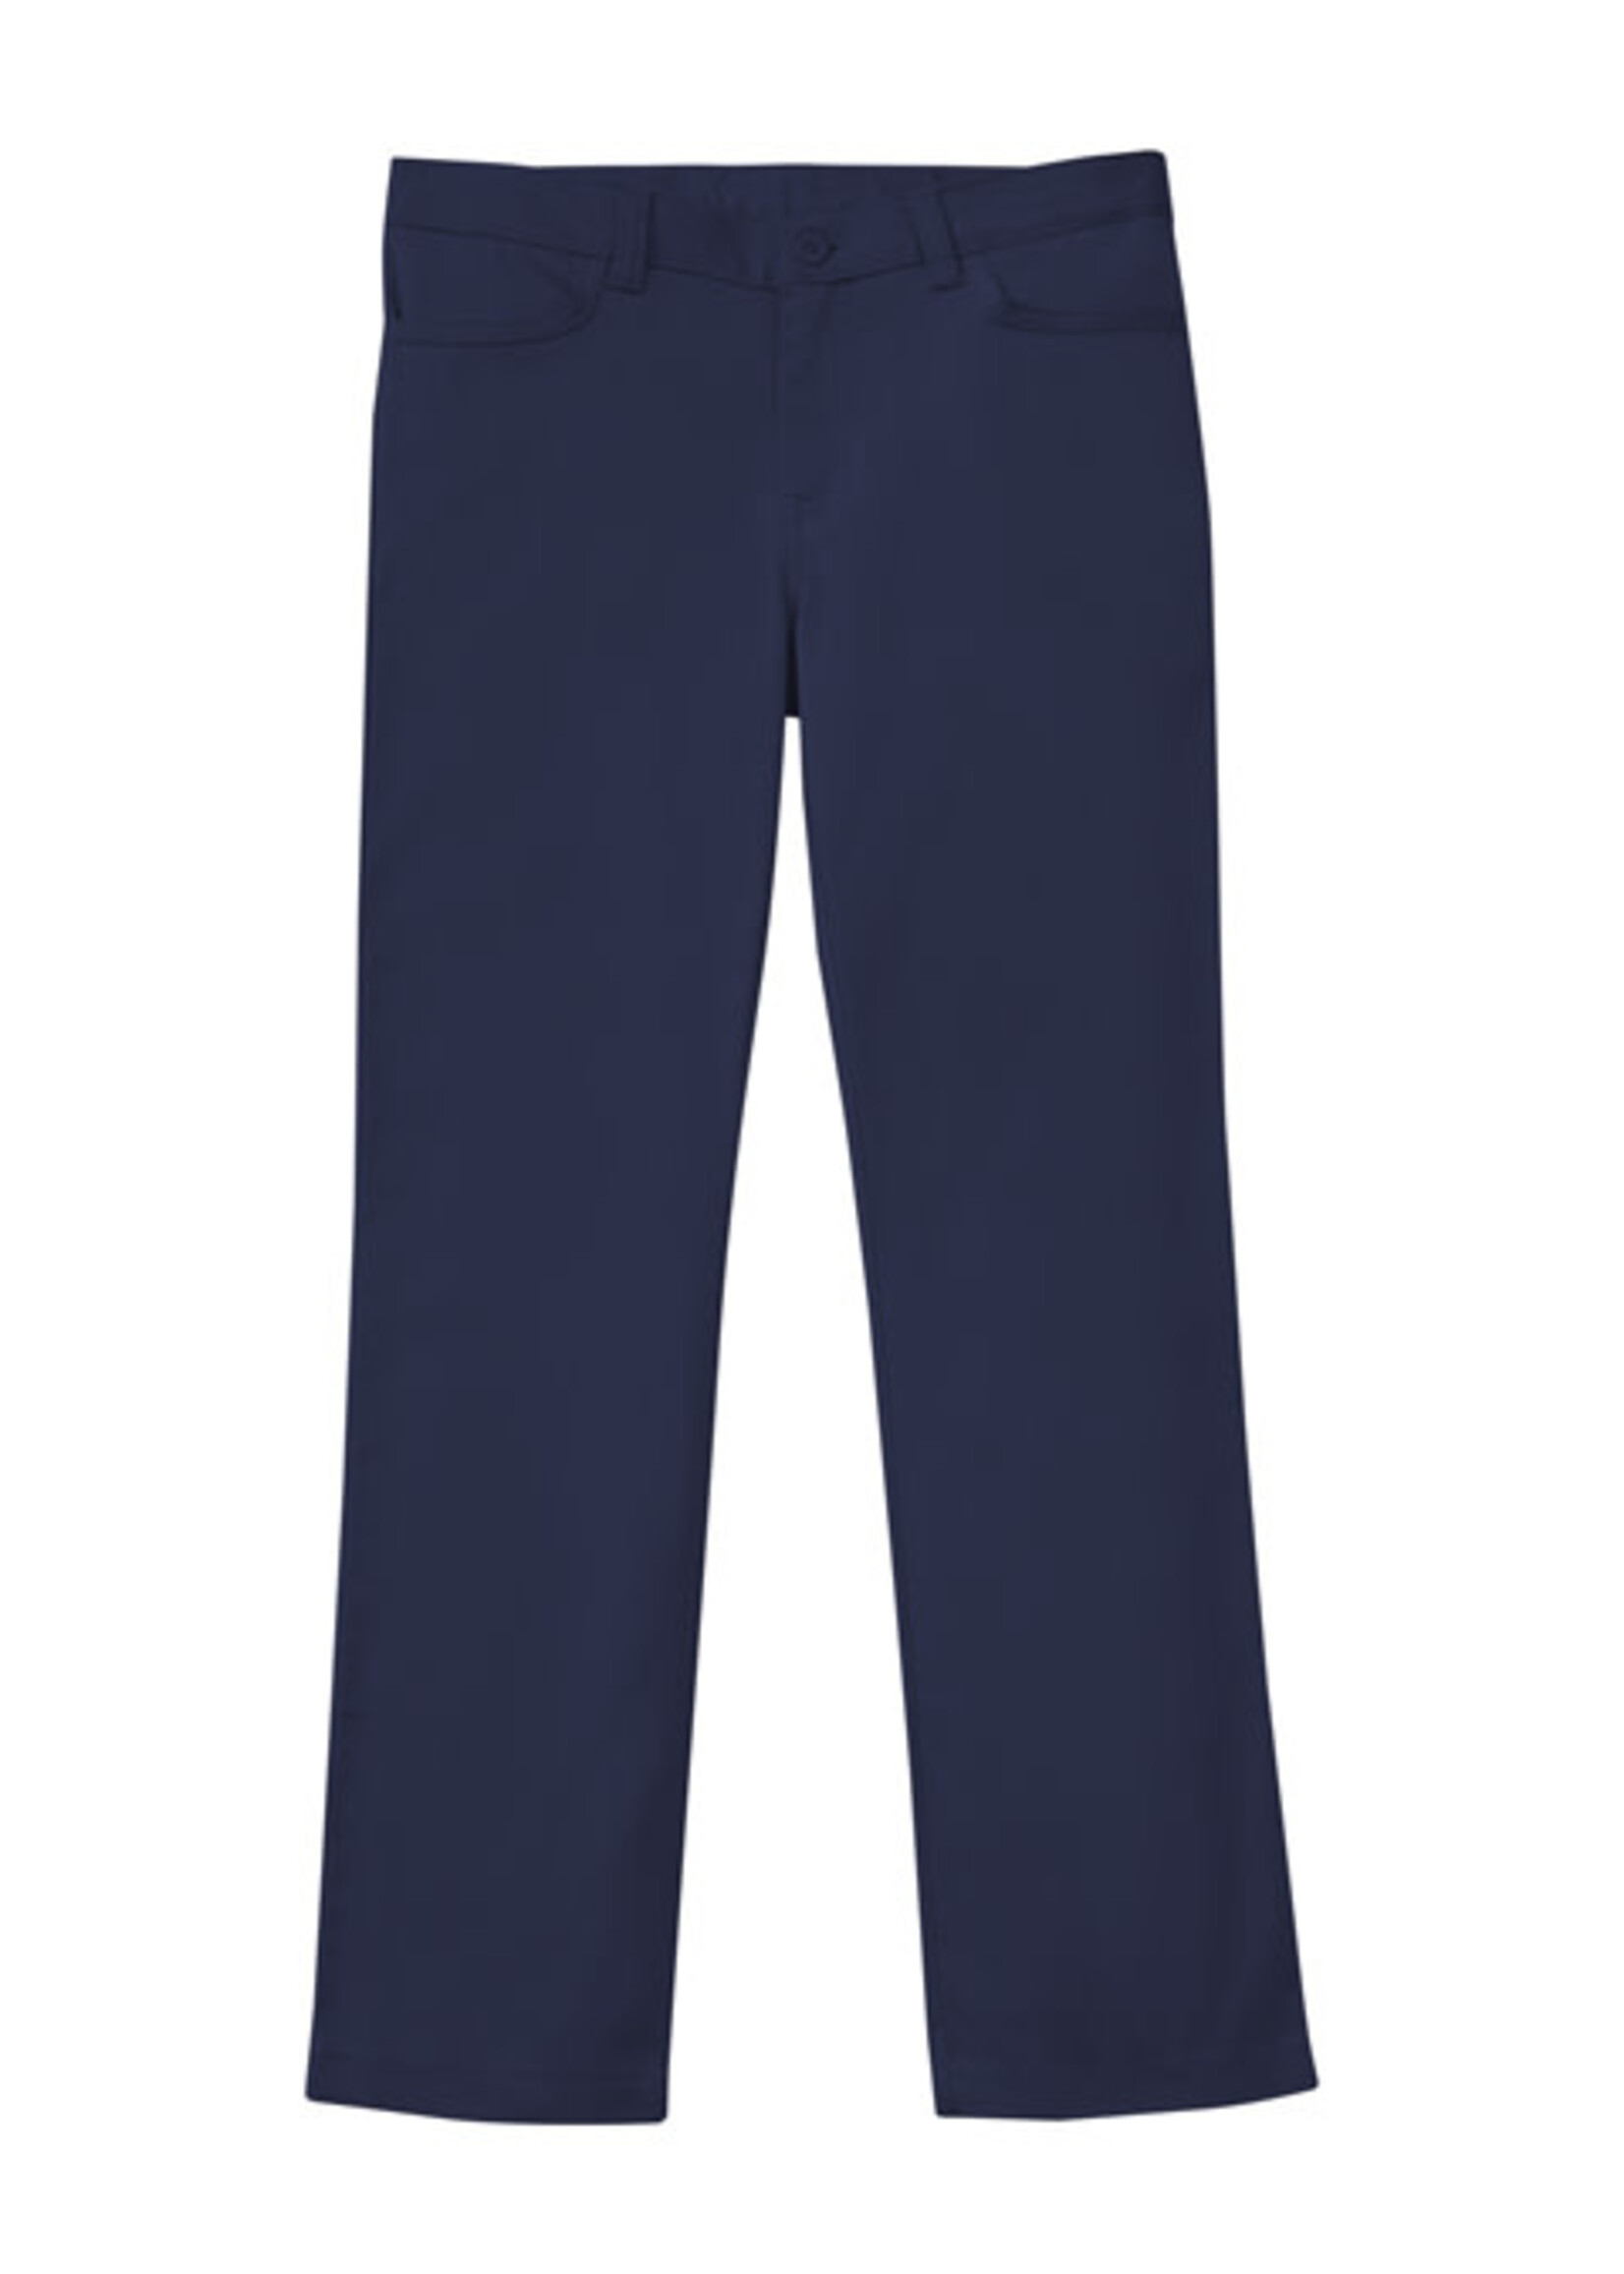 TUS Girls Navy Value Matchstick Pants